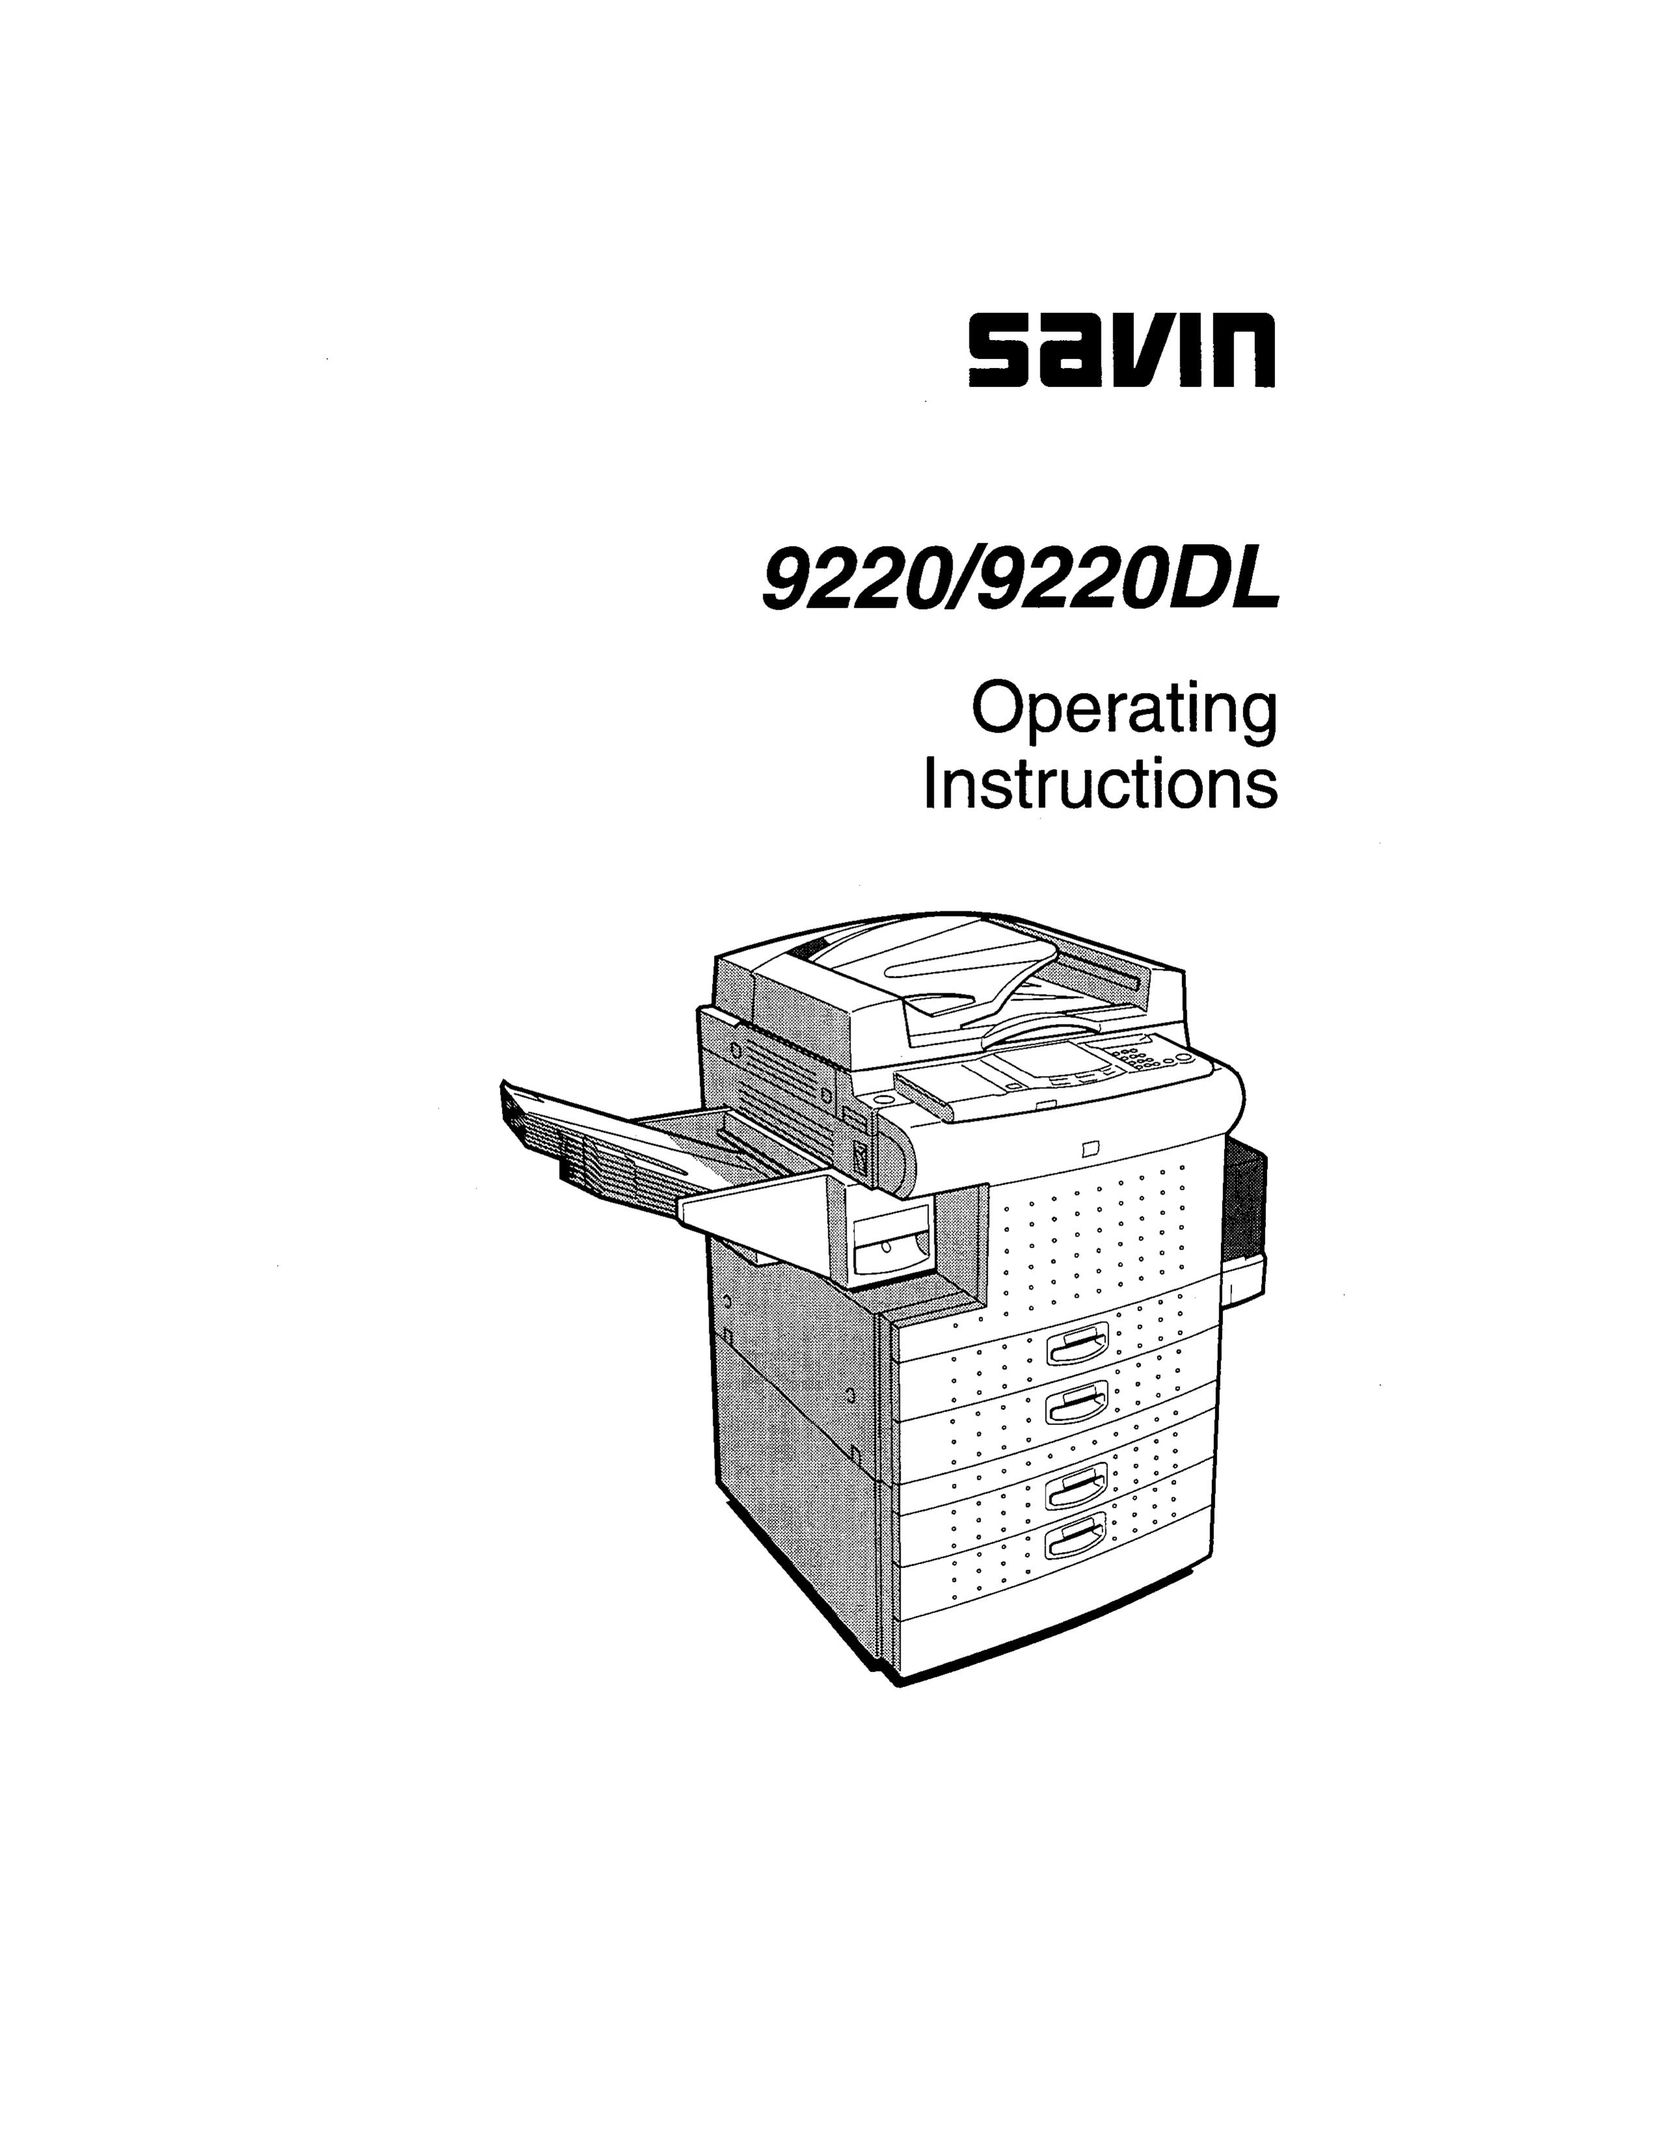 Savin 9220/9220DL All in One Printer User Manual